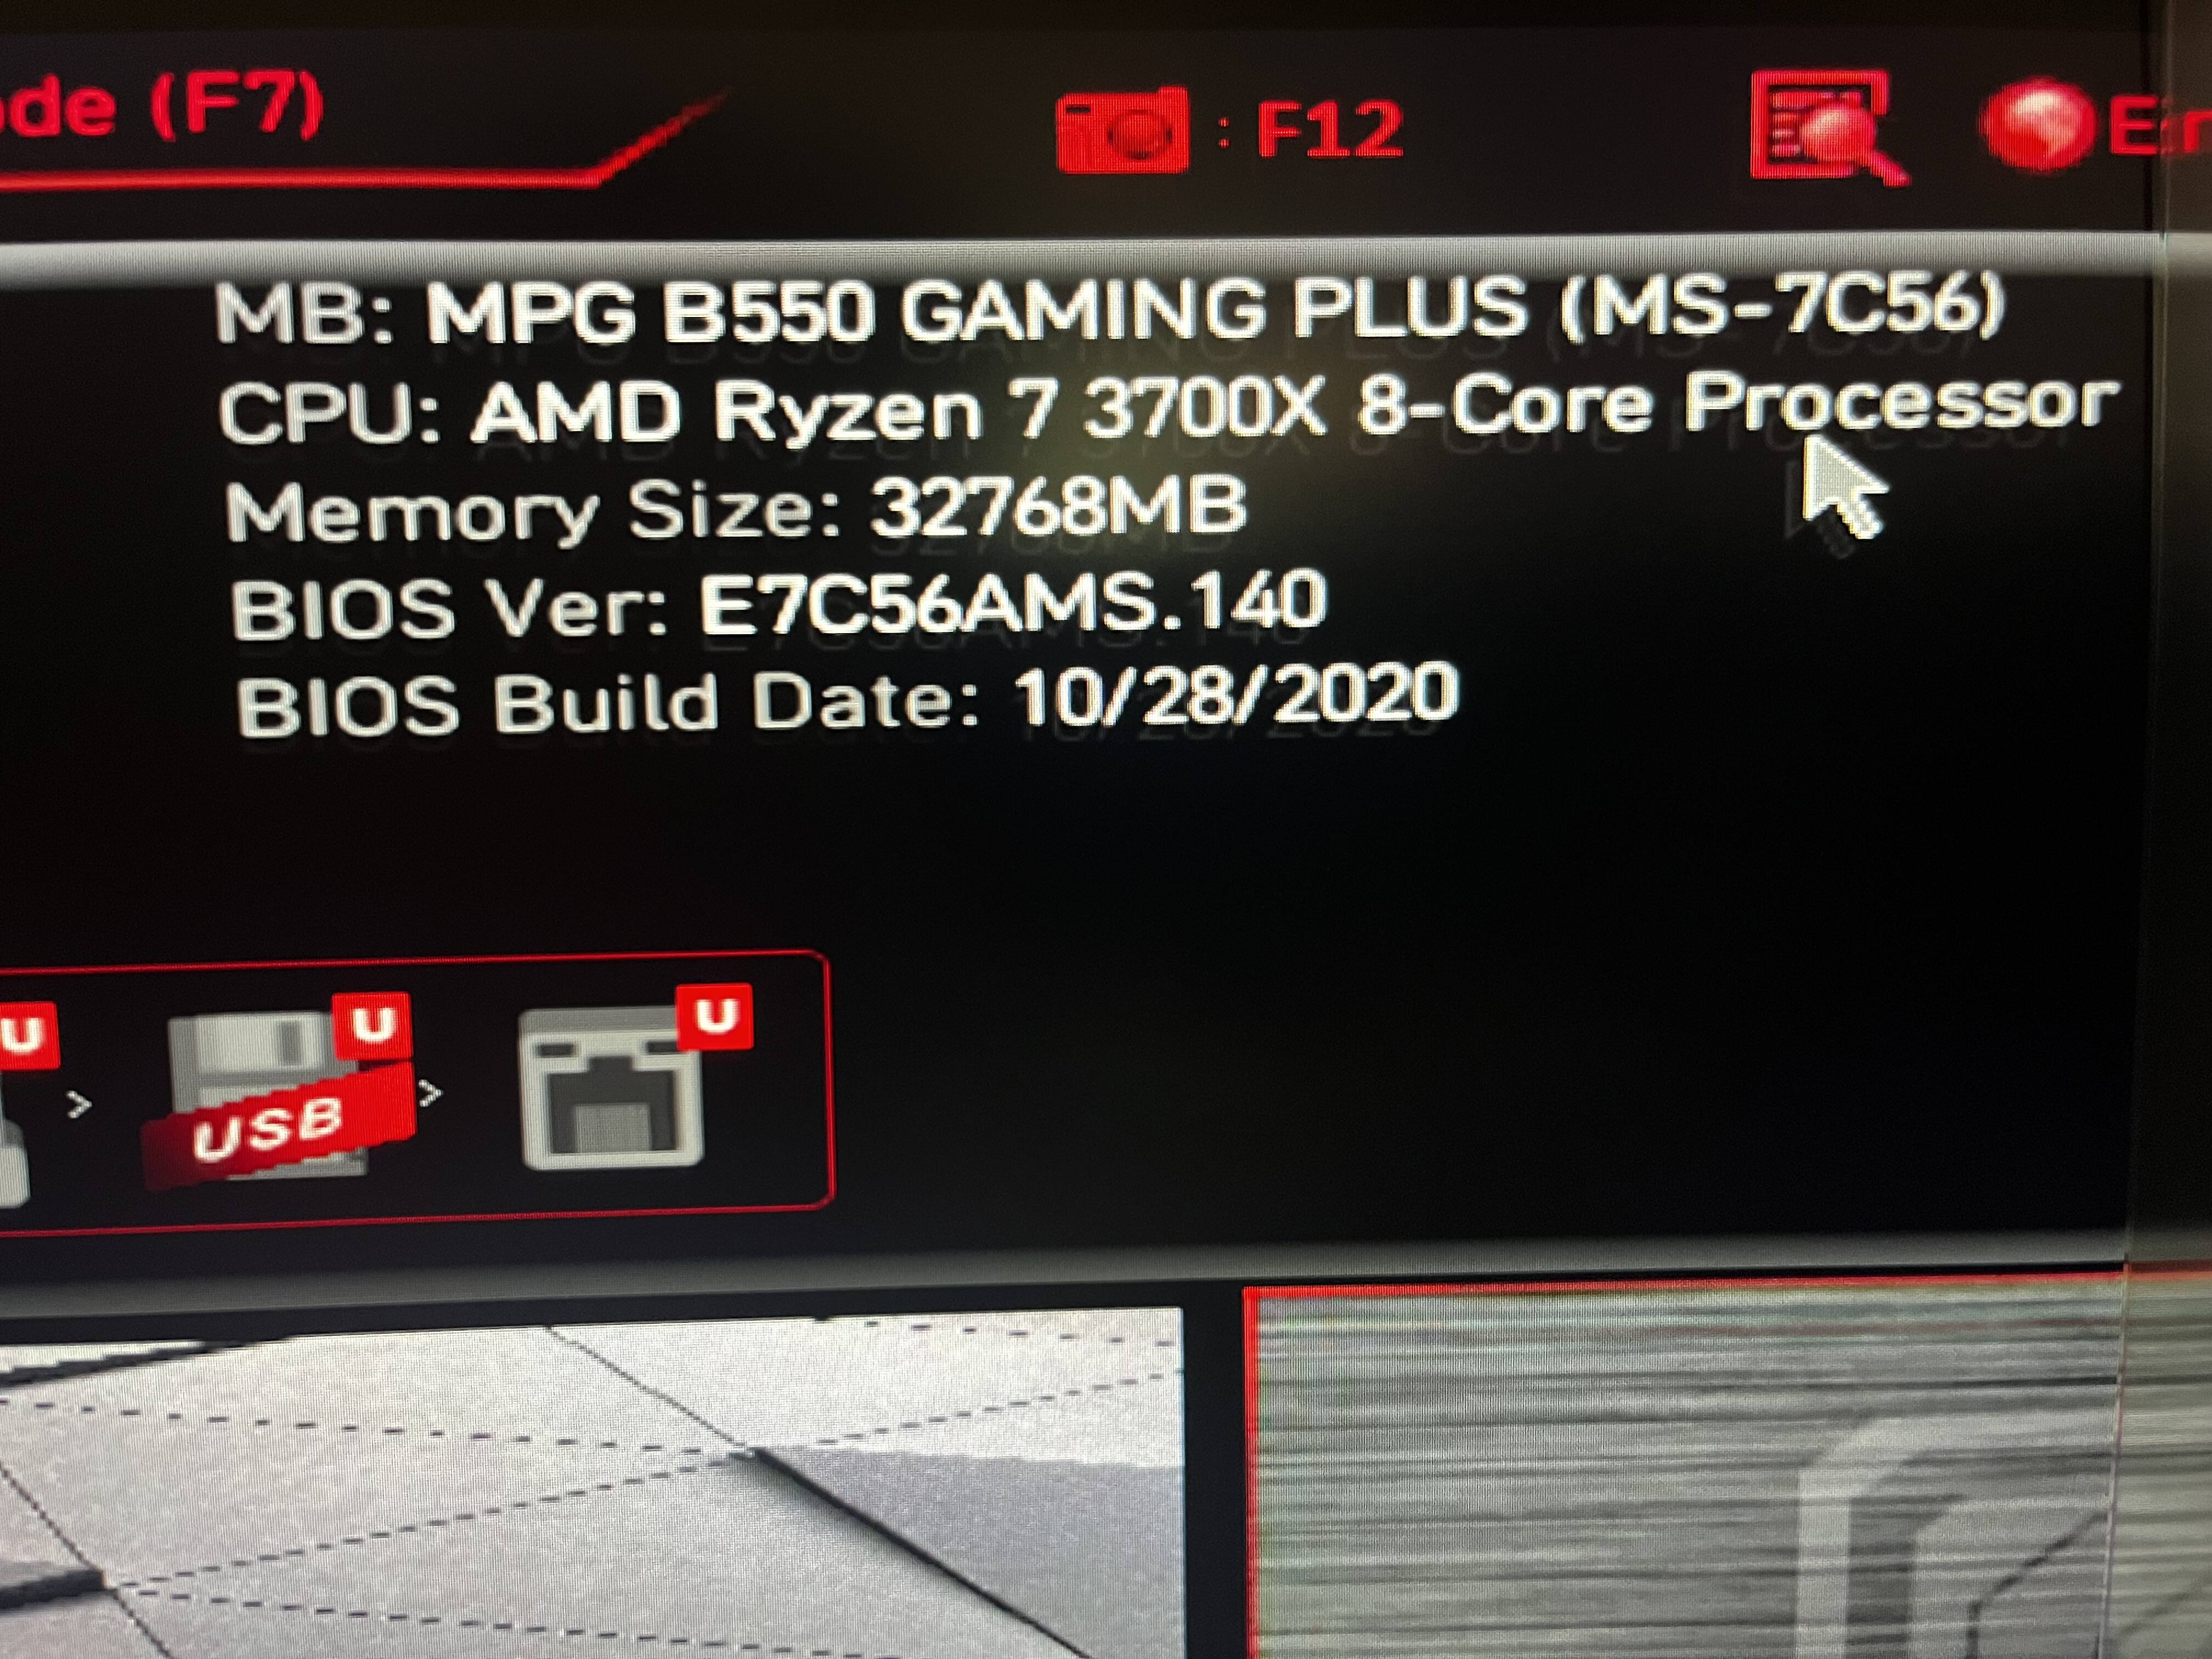 MSI MPG B550 Gaming Plus Bios version. - CPUs, Motherboards, and